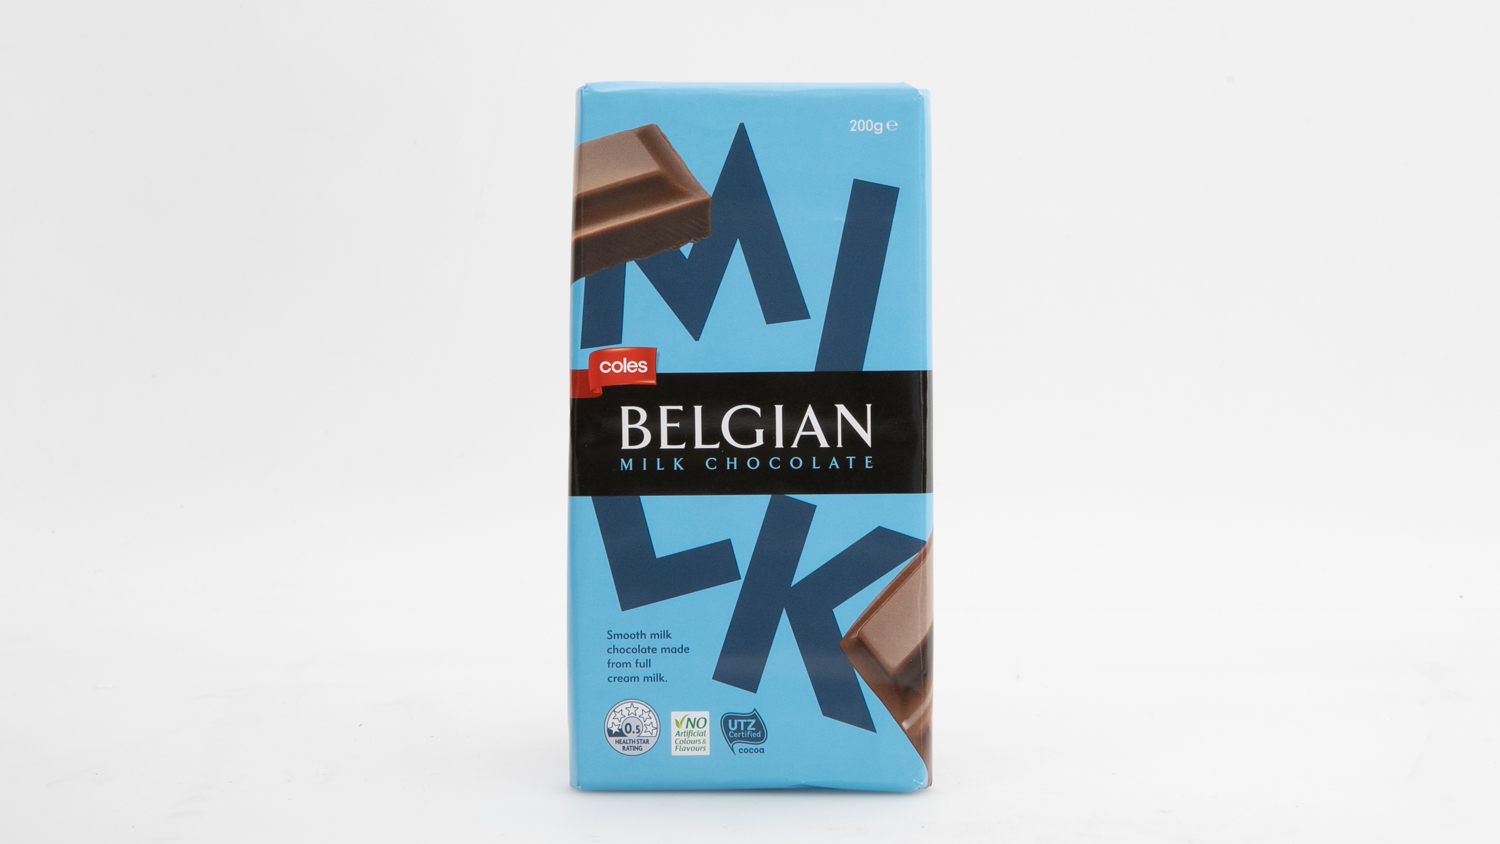 Coles Belgian Milk Chocolate carousel image